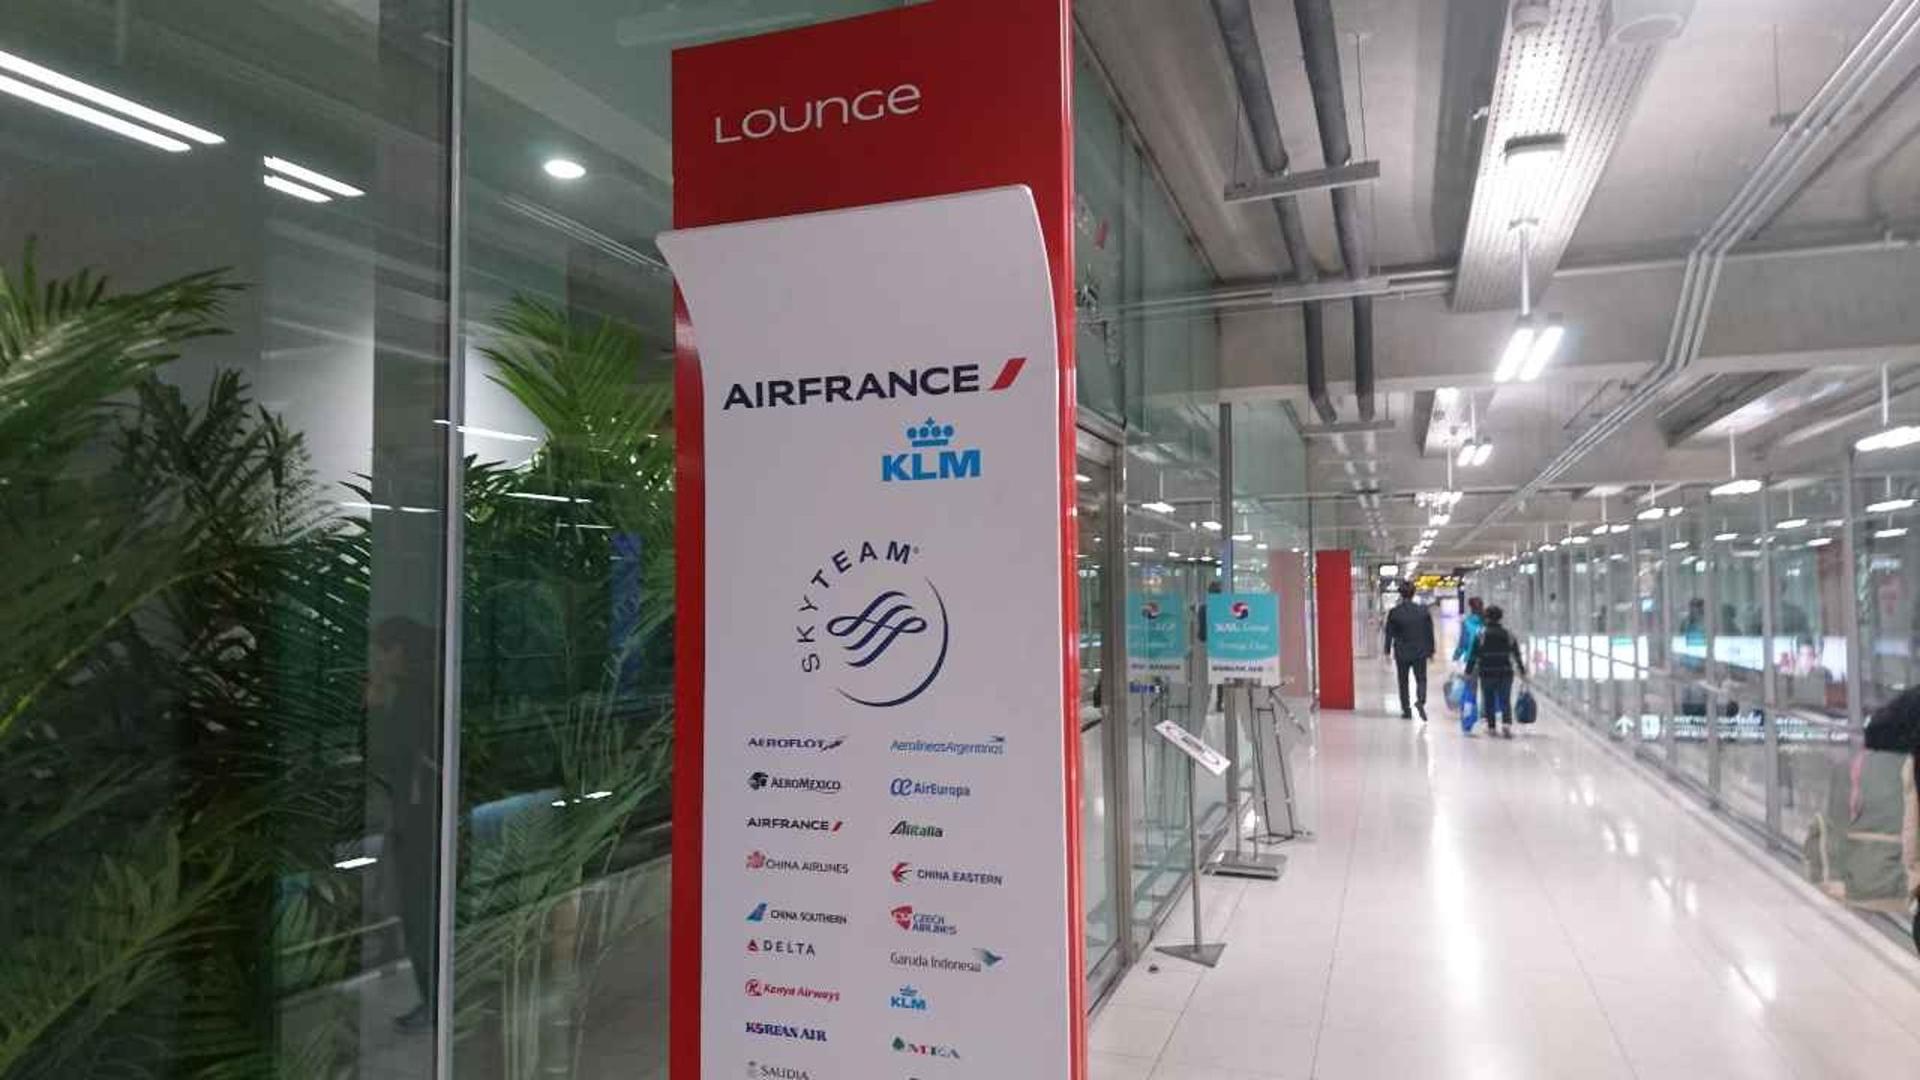 Air France/KLM Lounge image 15 of 28